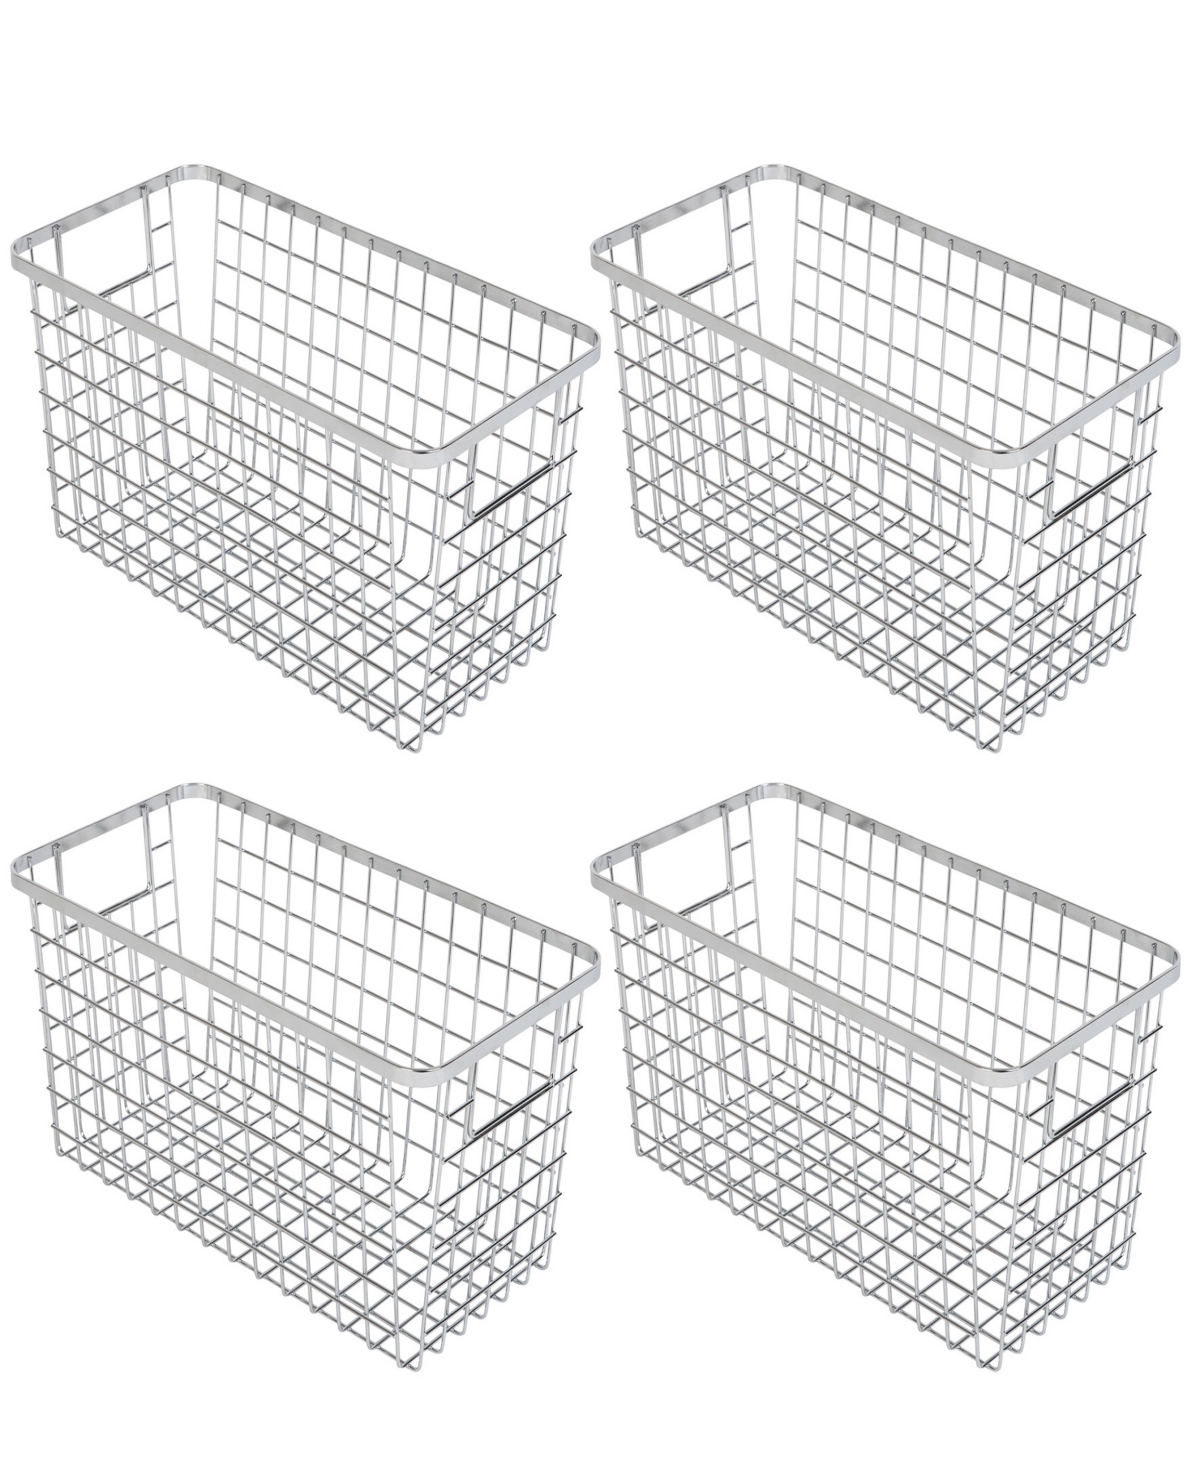 Nestable 6" x 12" x 6" Basket Organizer with Handles, Set of 4 - Chrome